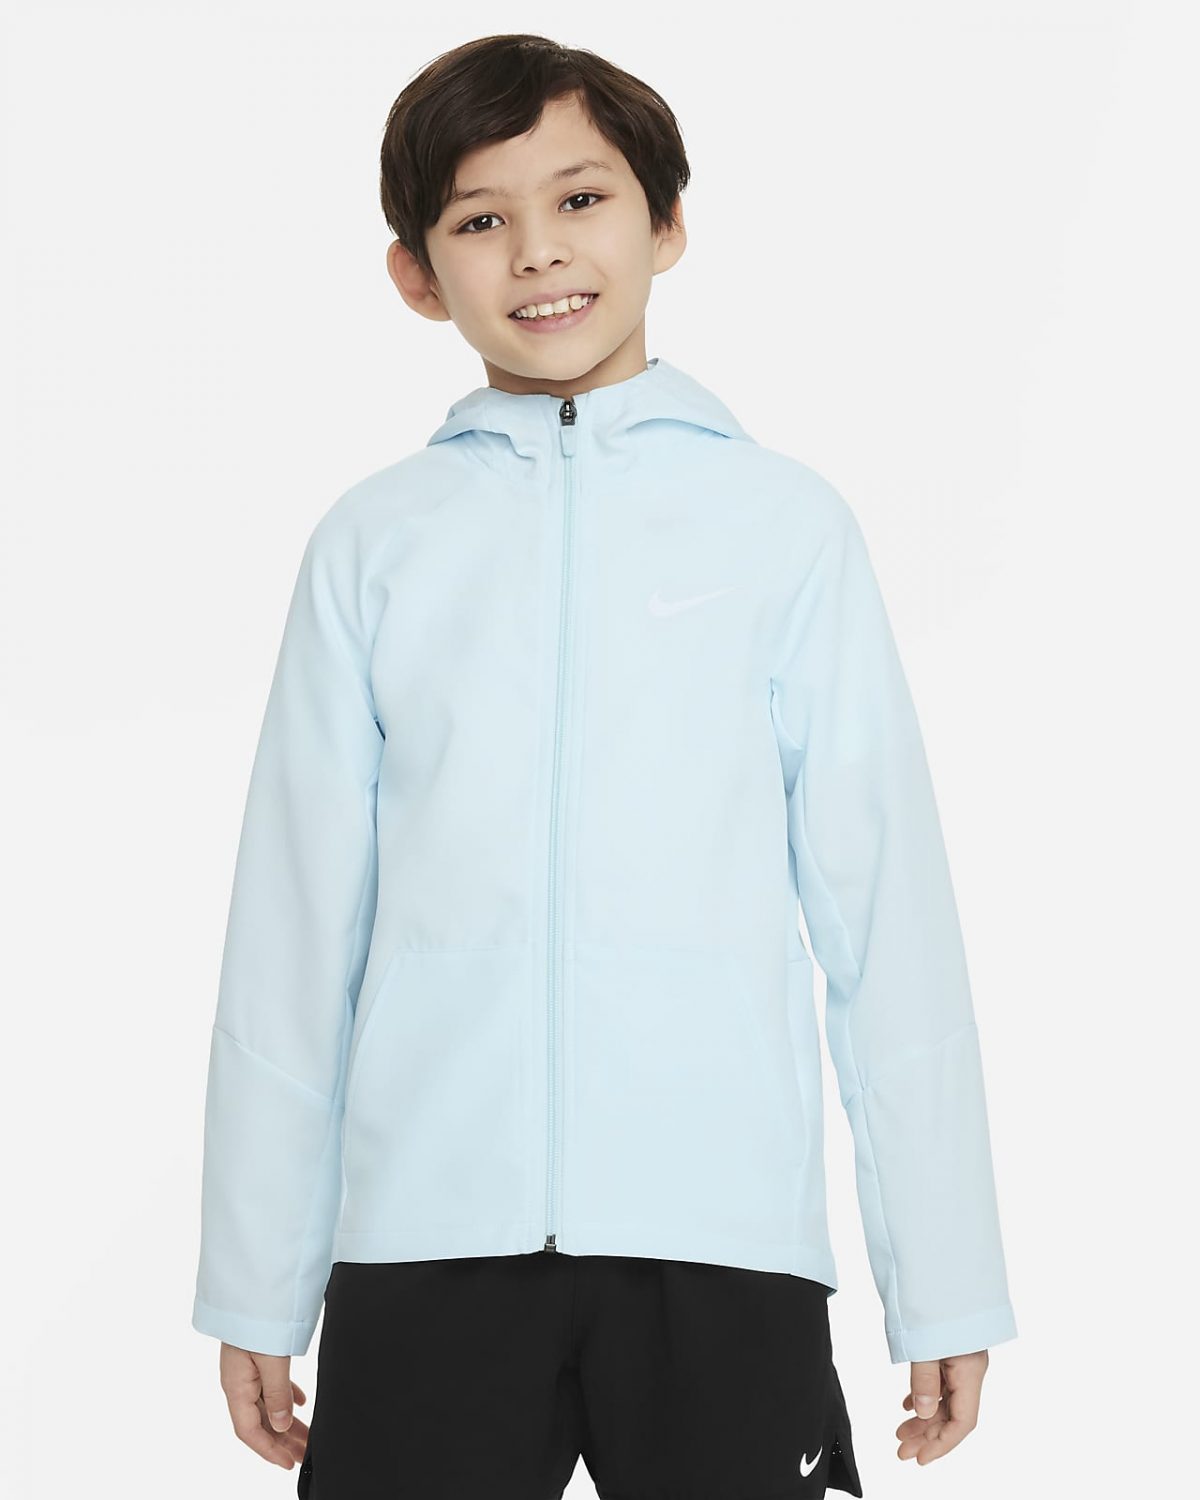 Детская куртка Nike Dri-FIT фото